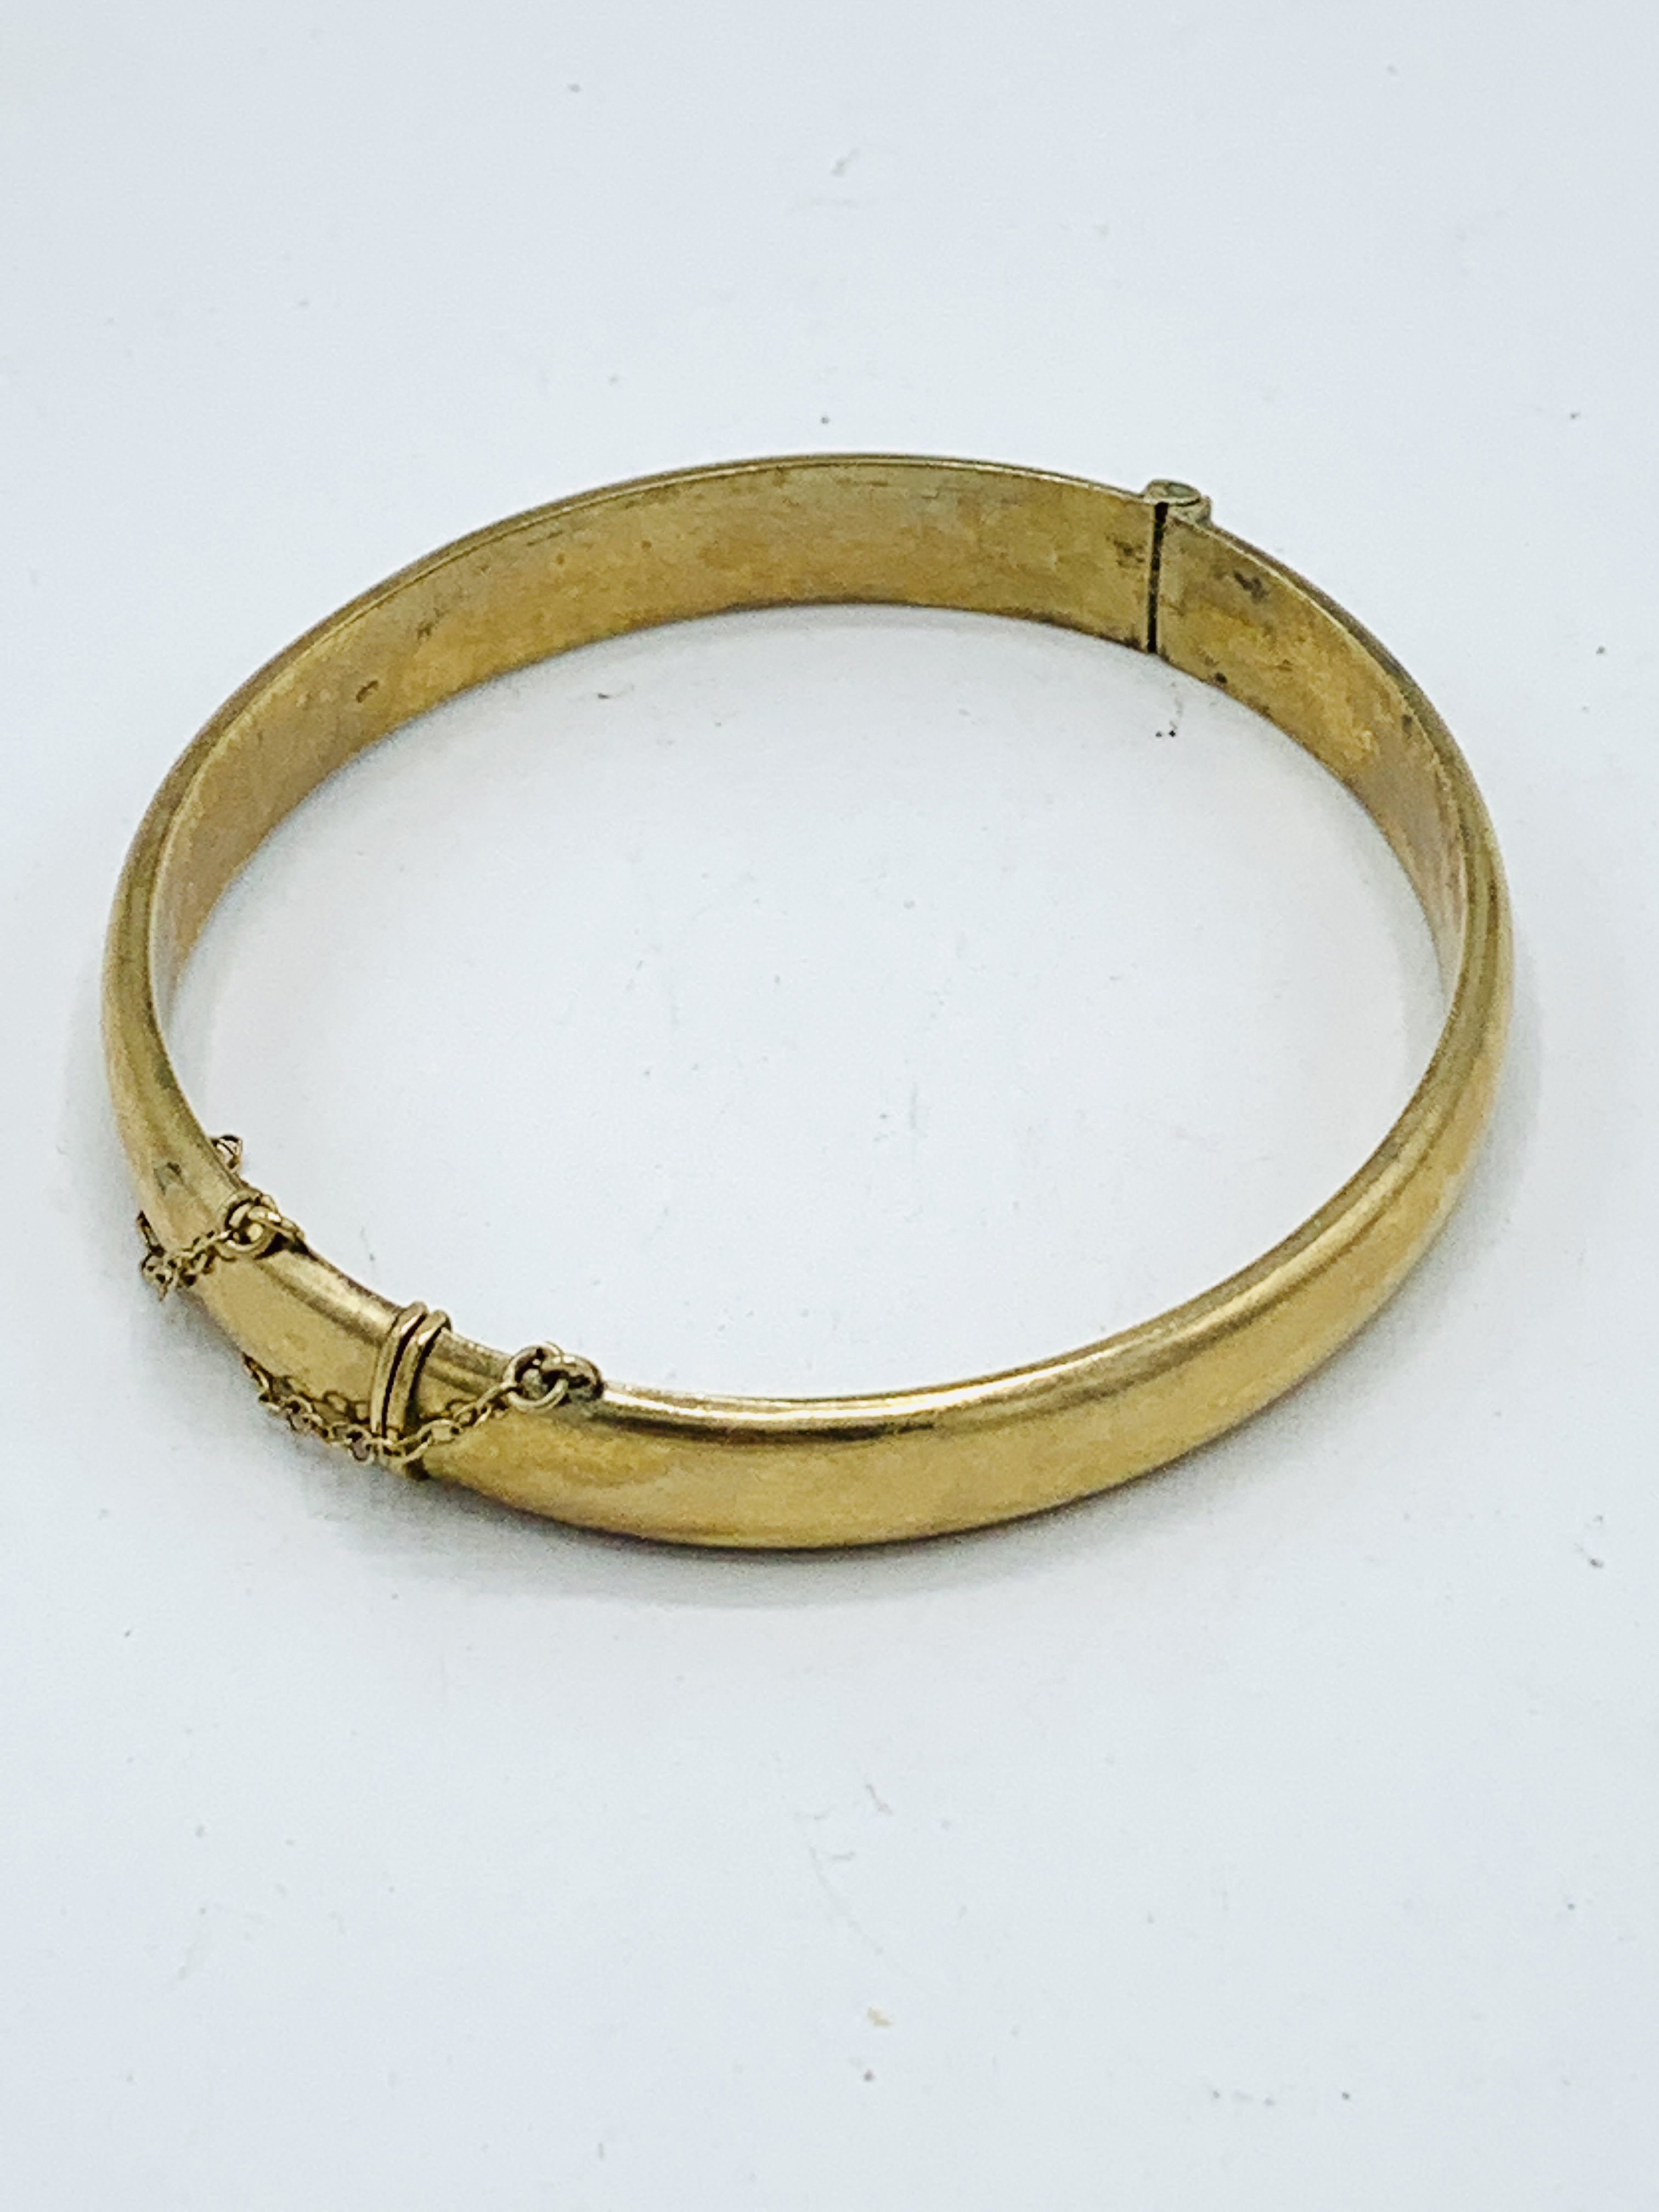 9ct gold plain bracelet - Image 3 of 3